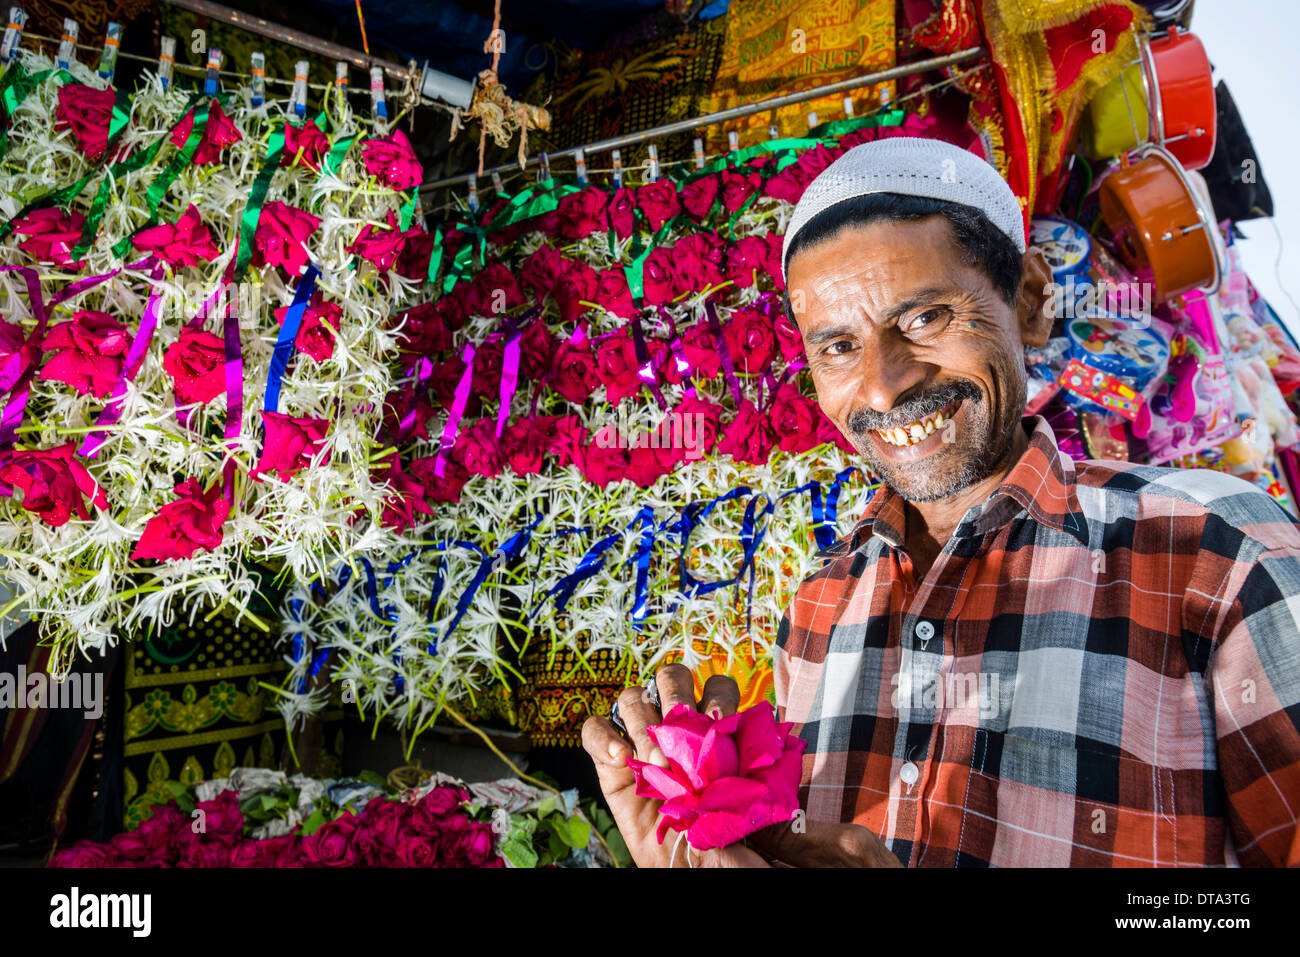 Un vendeur musulman est la vente de fleurs, Mahalaksmi, Mumbai, Maharashtra, Inde Banque D'Images